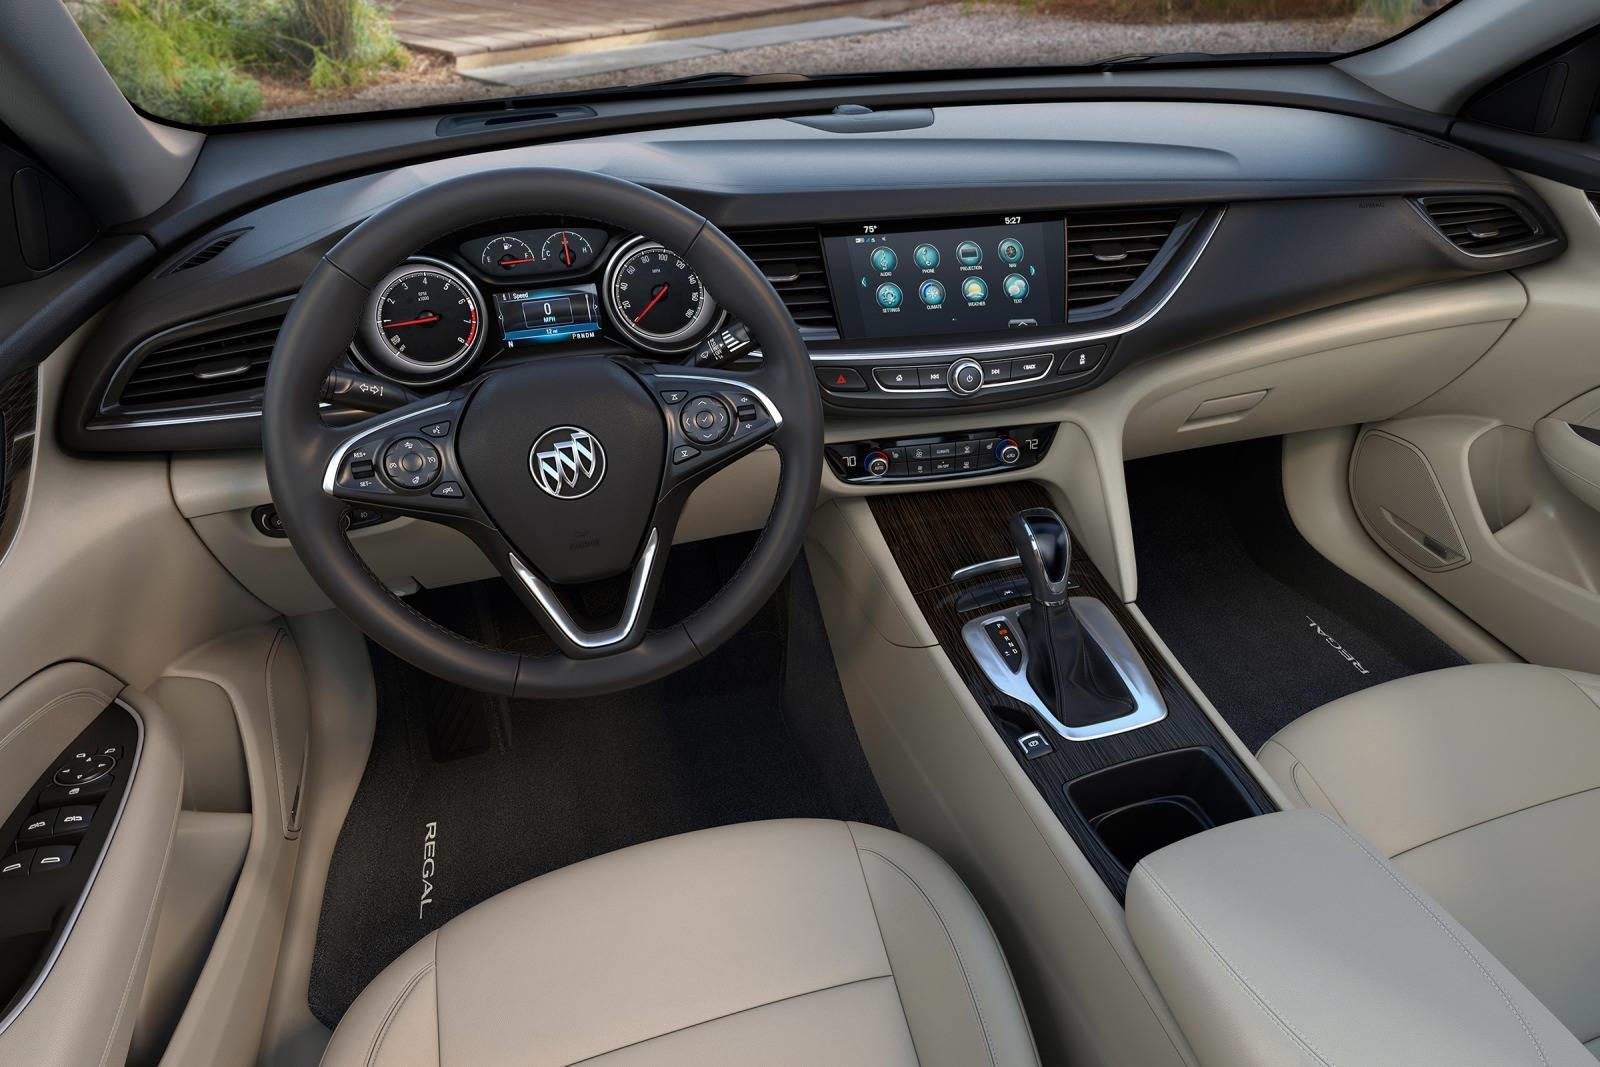 2010 Buick Regal GS Concept - Interior | Caricos